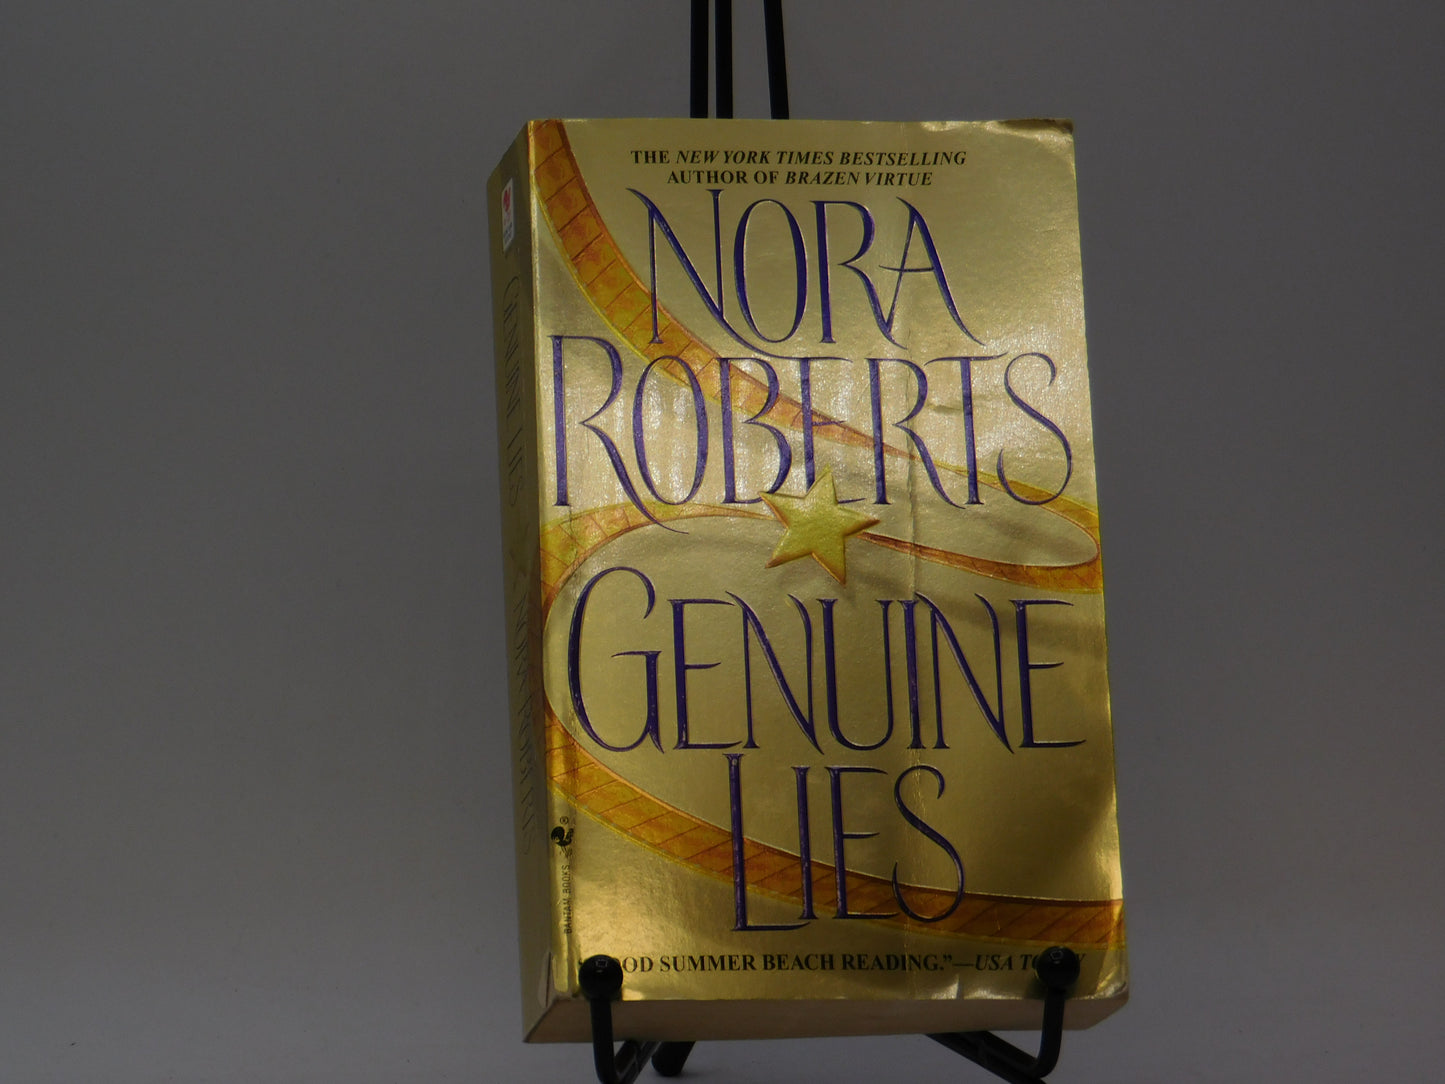 Genuine Lies: A Novel by Nora Roberts